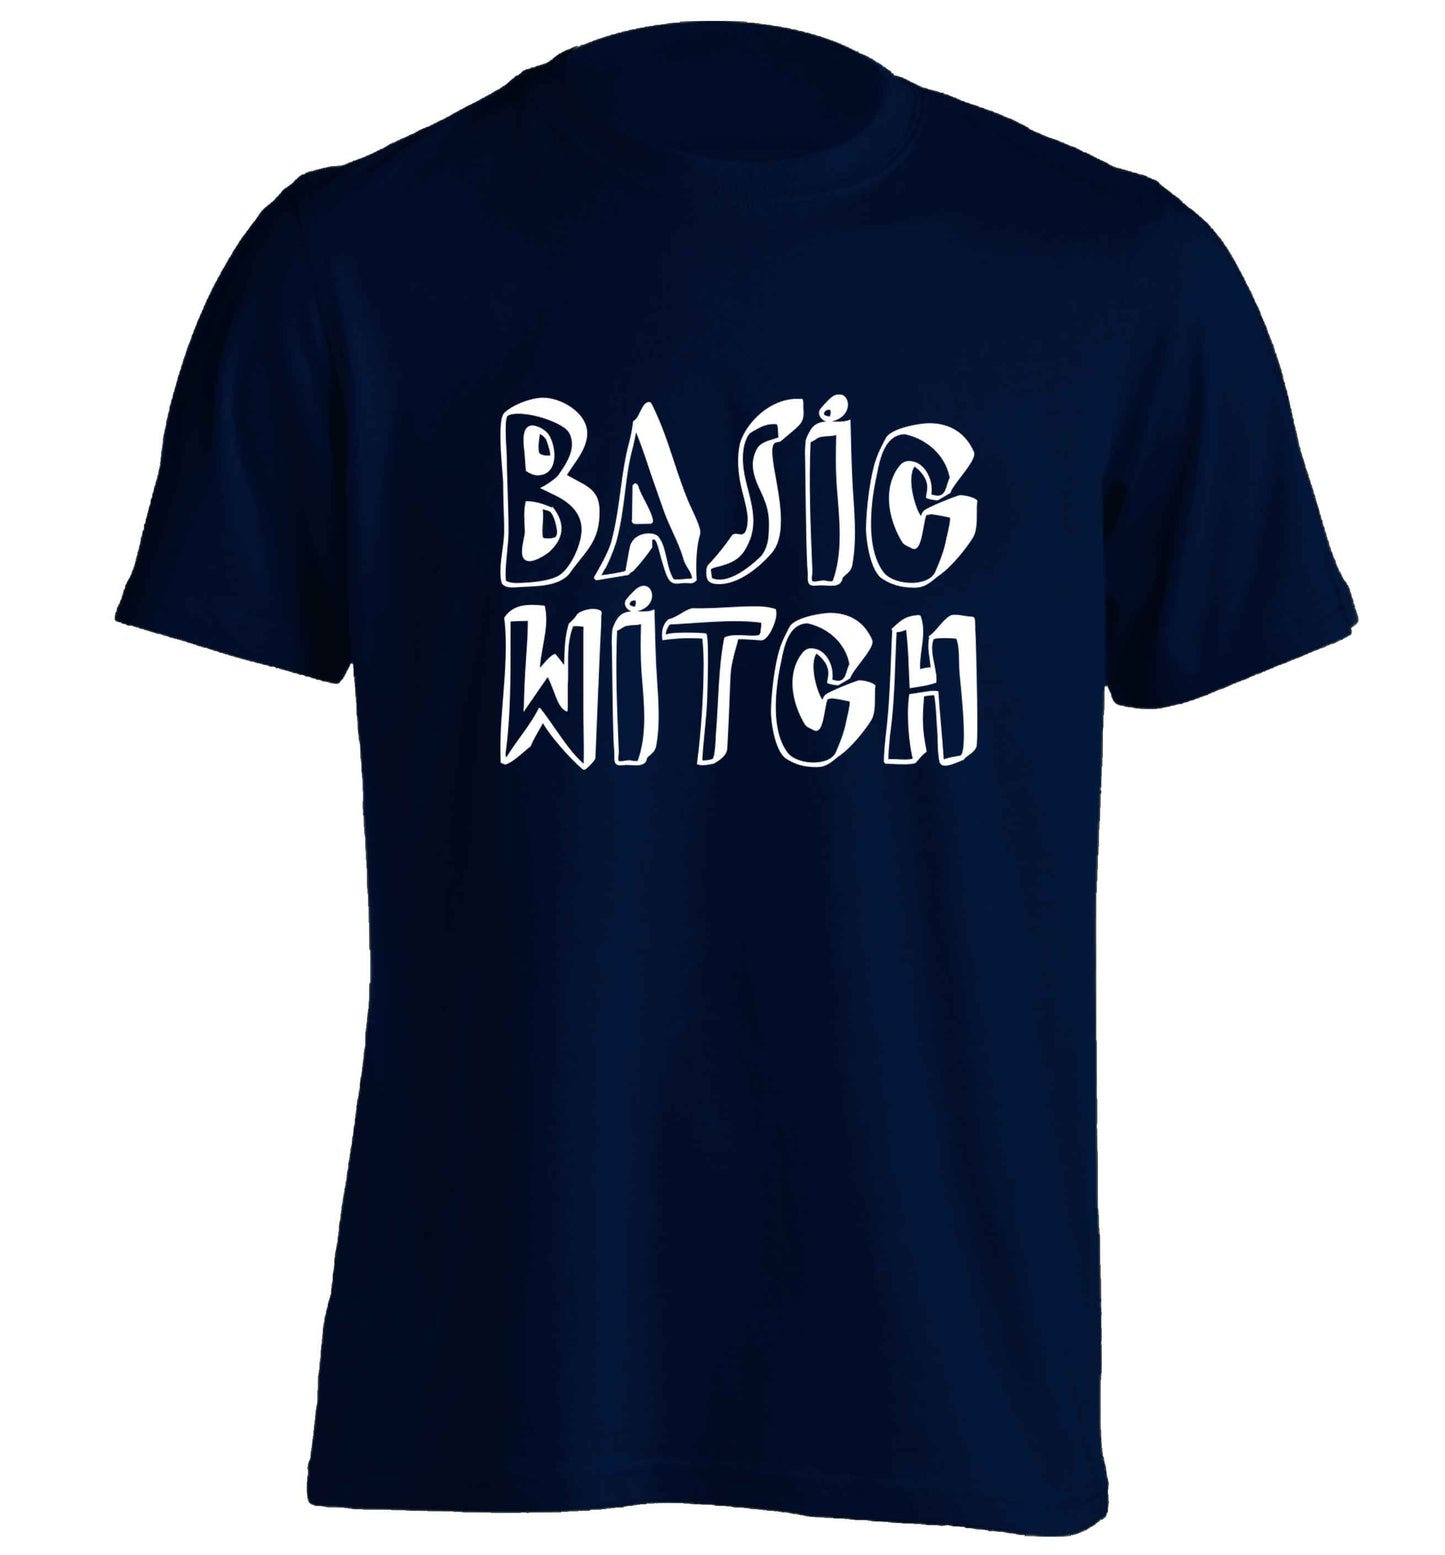 Basic witch adults unisex navy Tshirt 2XL